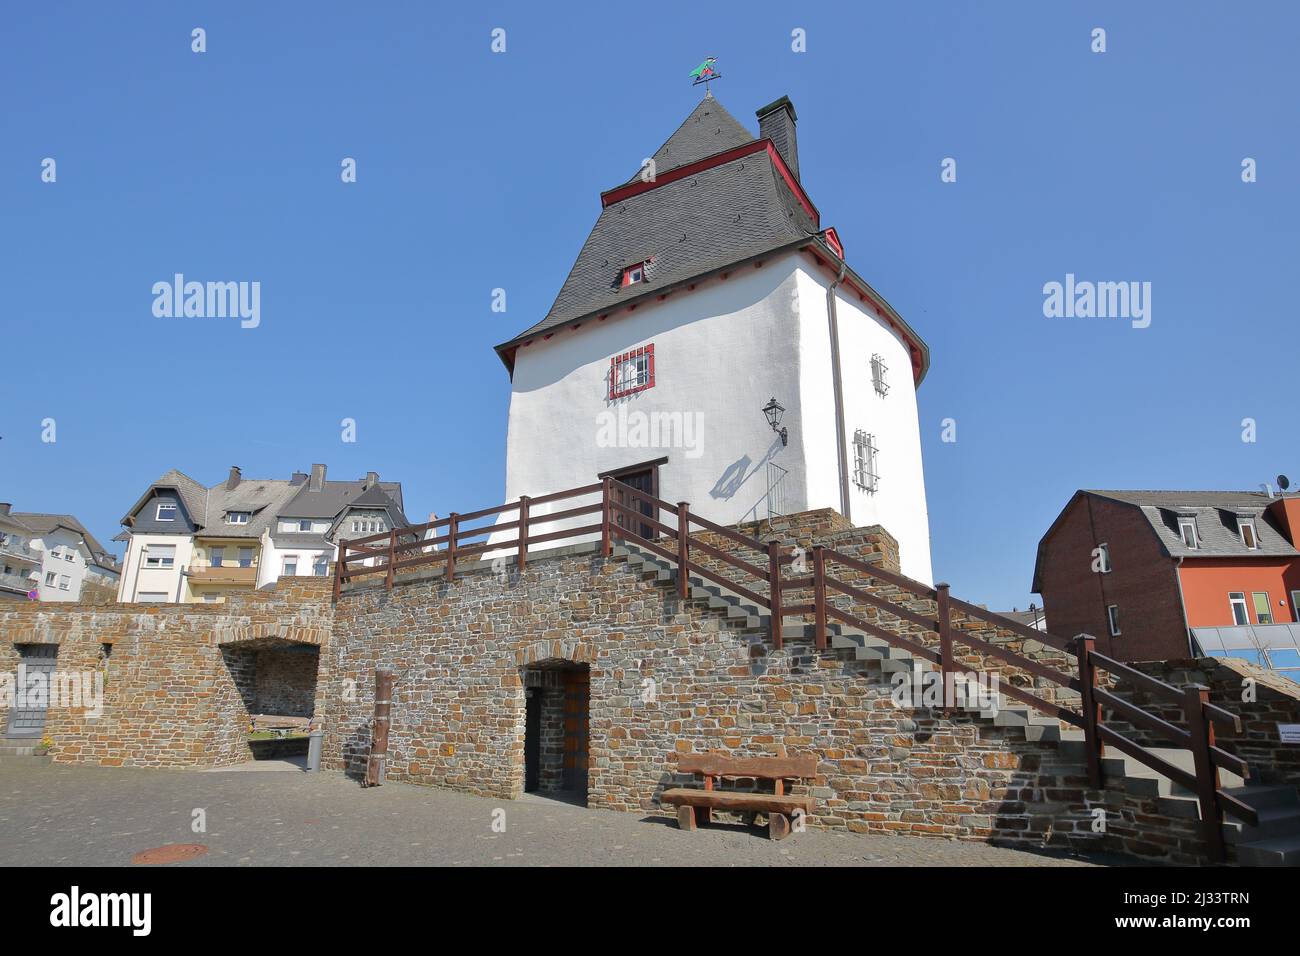 City wall with Schinderhannesturm built 18th century landmark in Simmern im Hunrueck, Rhineland-Palatinate, Germany Stock Photo